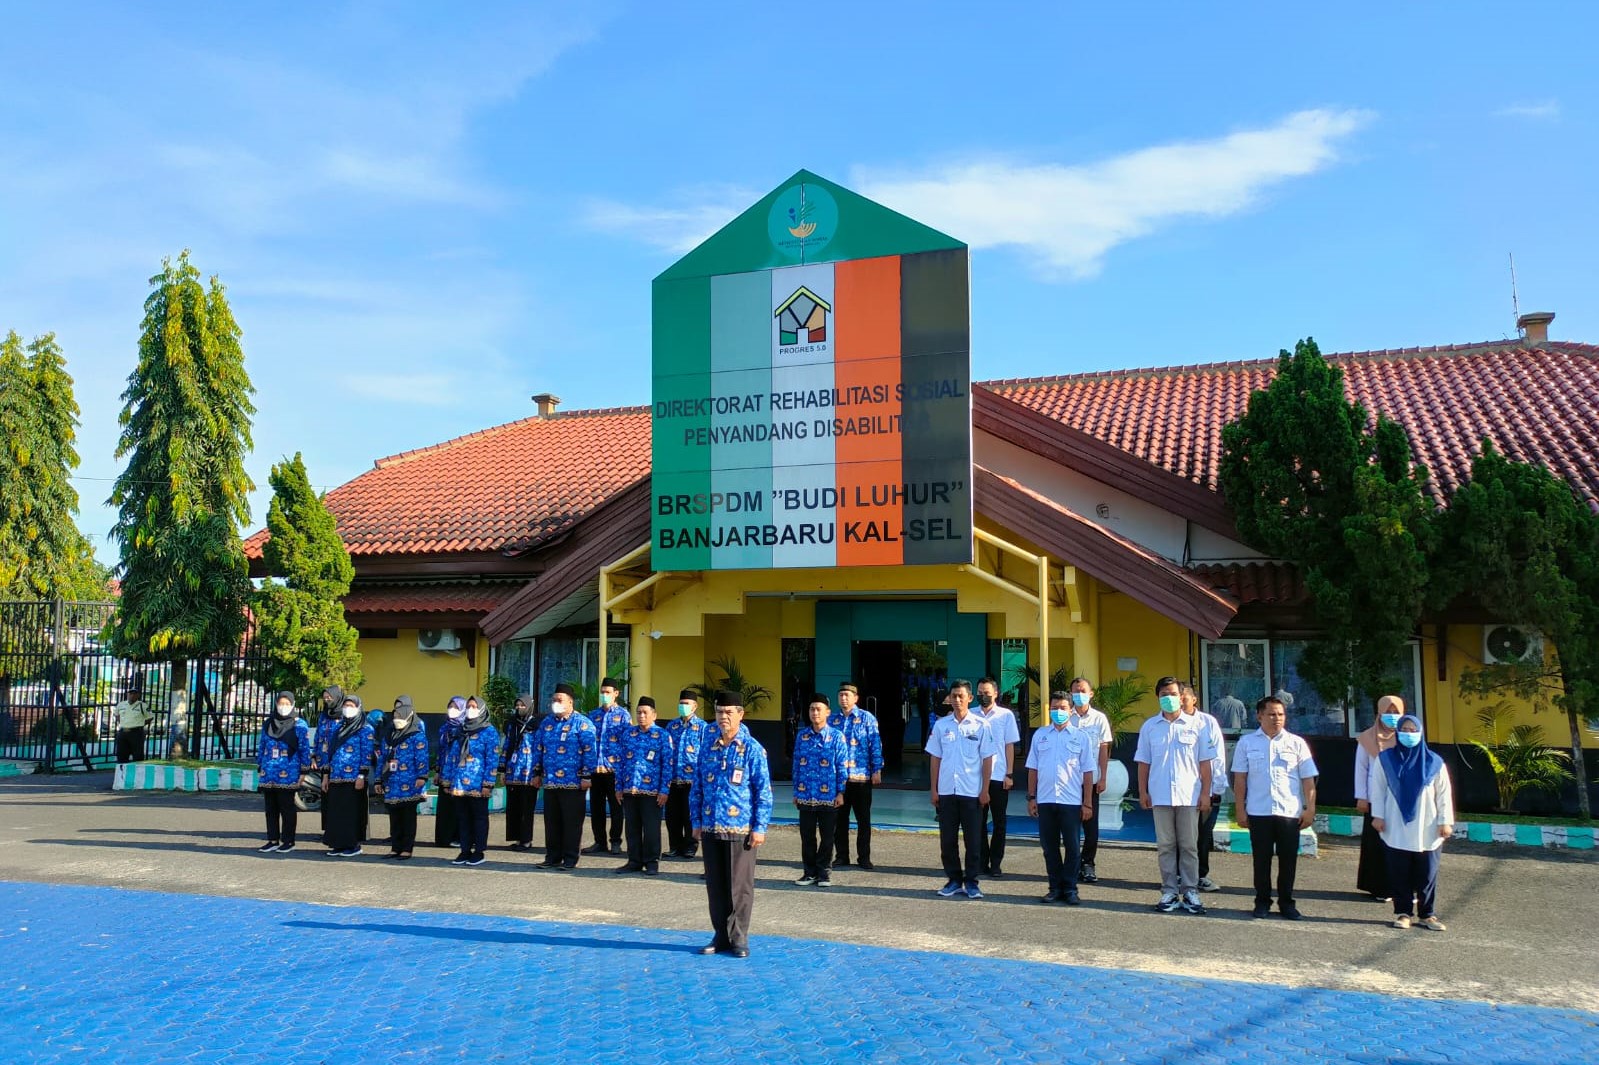 Pancasila Sanctity Day Ceremony Held at "Budi Luhur" Center in Banjarbaru